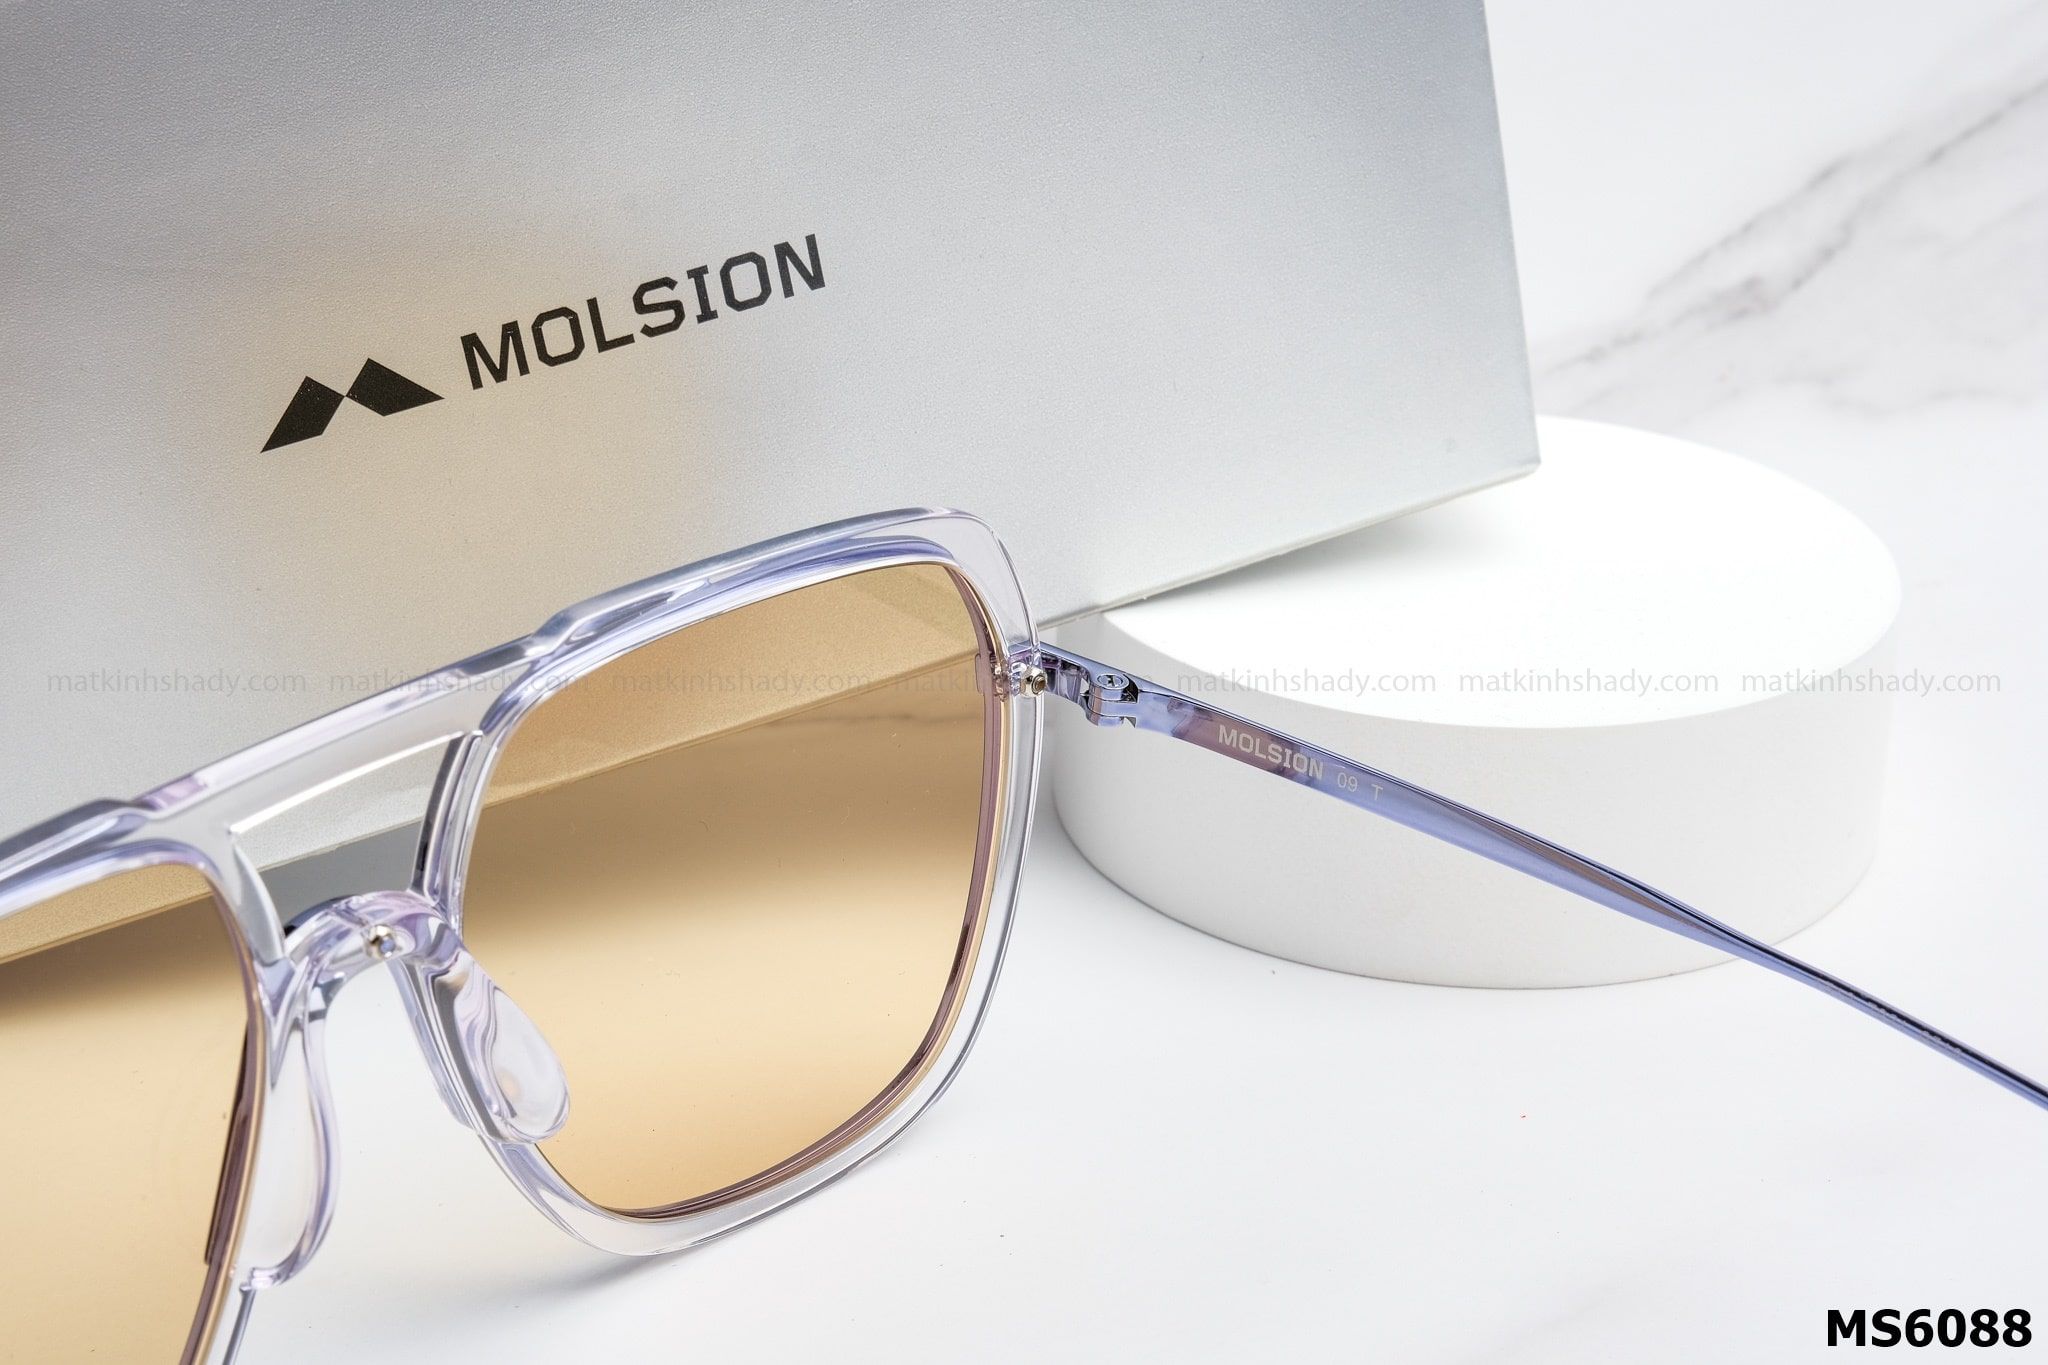  Molsion Eyewear - Sunglasses - MS6088 